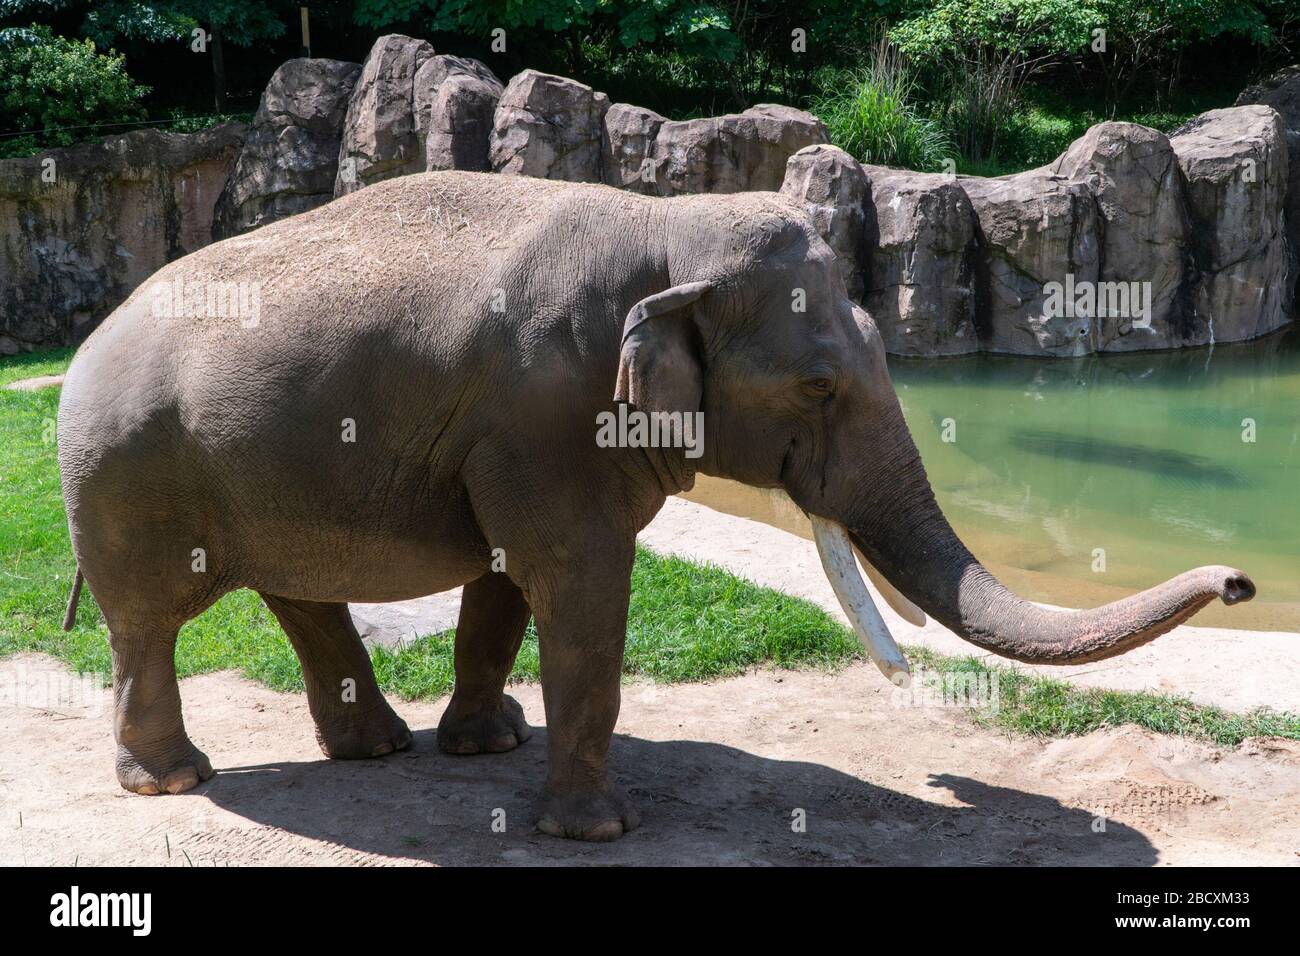 Asian Elephant. Elephant Trails,Asian elephant,Spike,Species: maximus,Genus: Elephas,Family: Elephantidae,Order: Proboscidea,Class: Mammalia,Phylum: Chordata,Kingdom: Animalia Asian Elephant Stock Photo